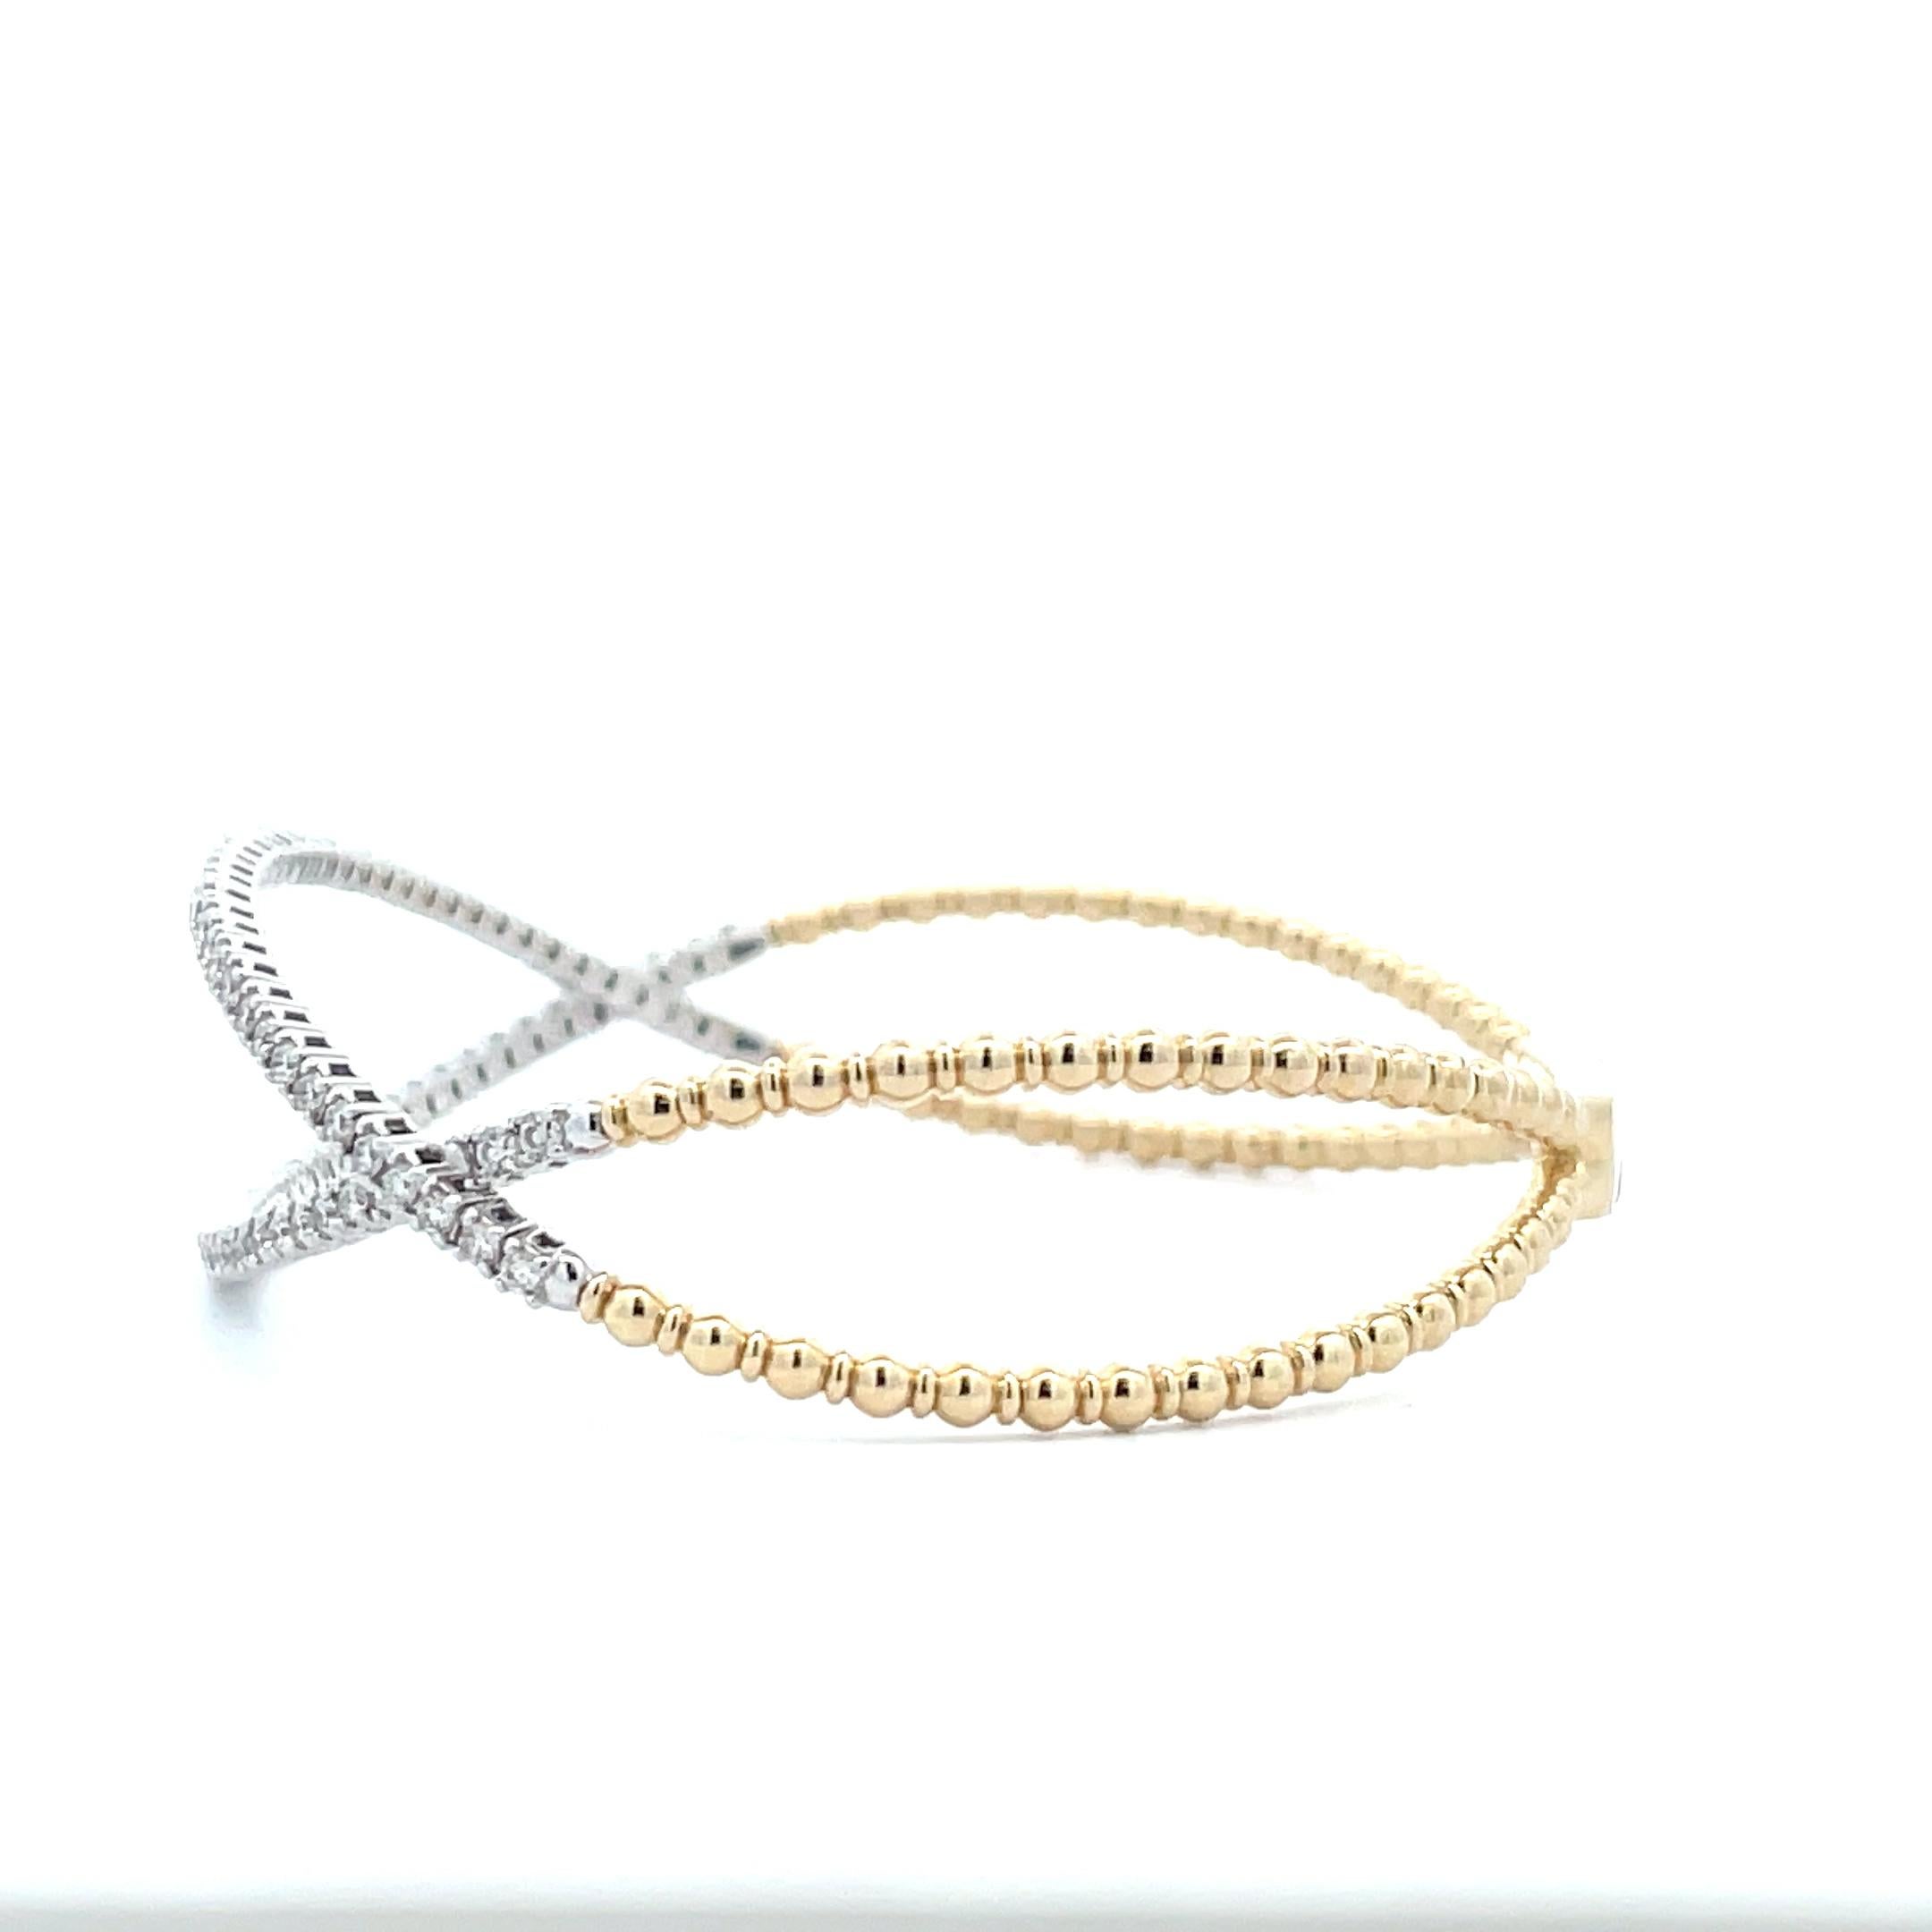 Art Deco 1.14 Carat Diamond Infinity Criss-Cross Gold Bead Bangle in 14k Solid Gold